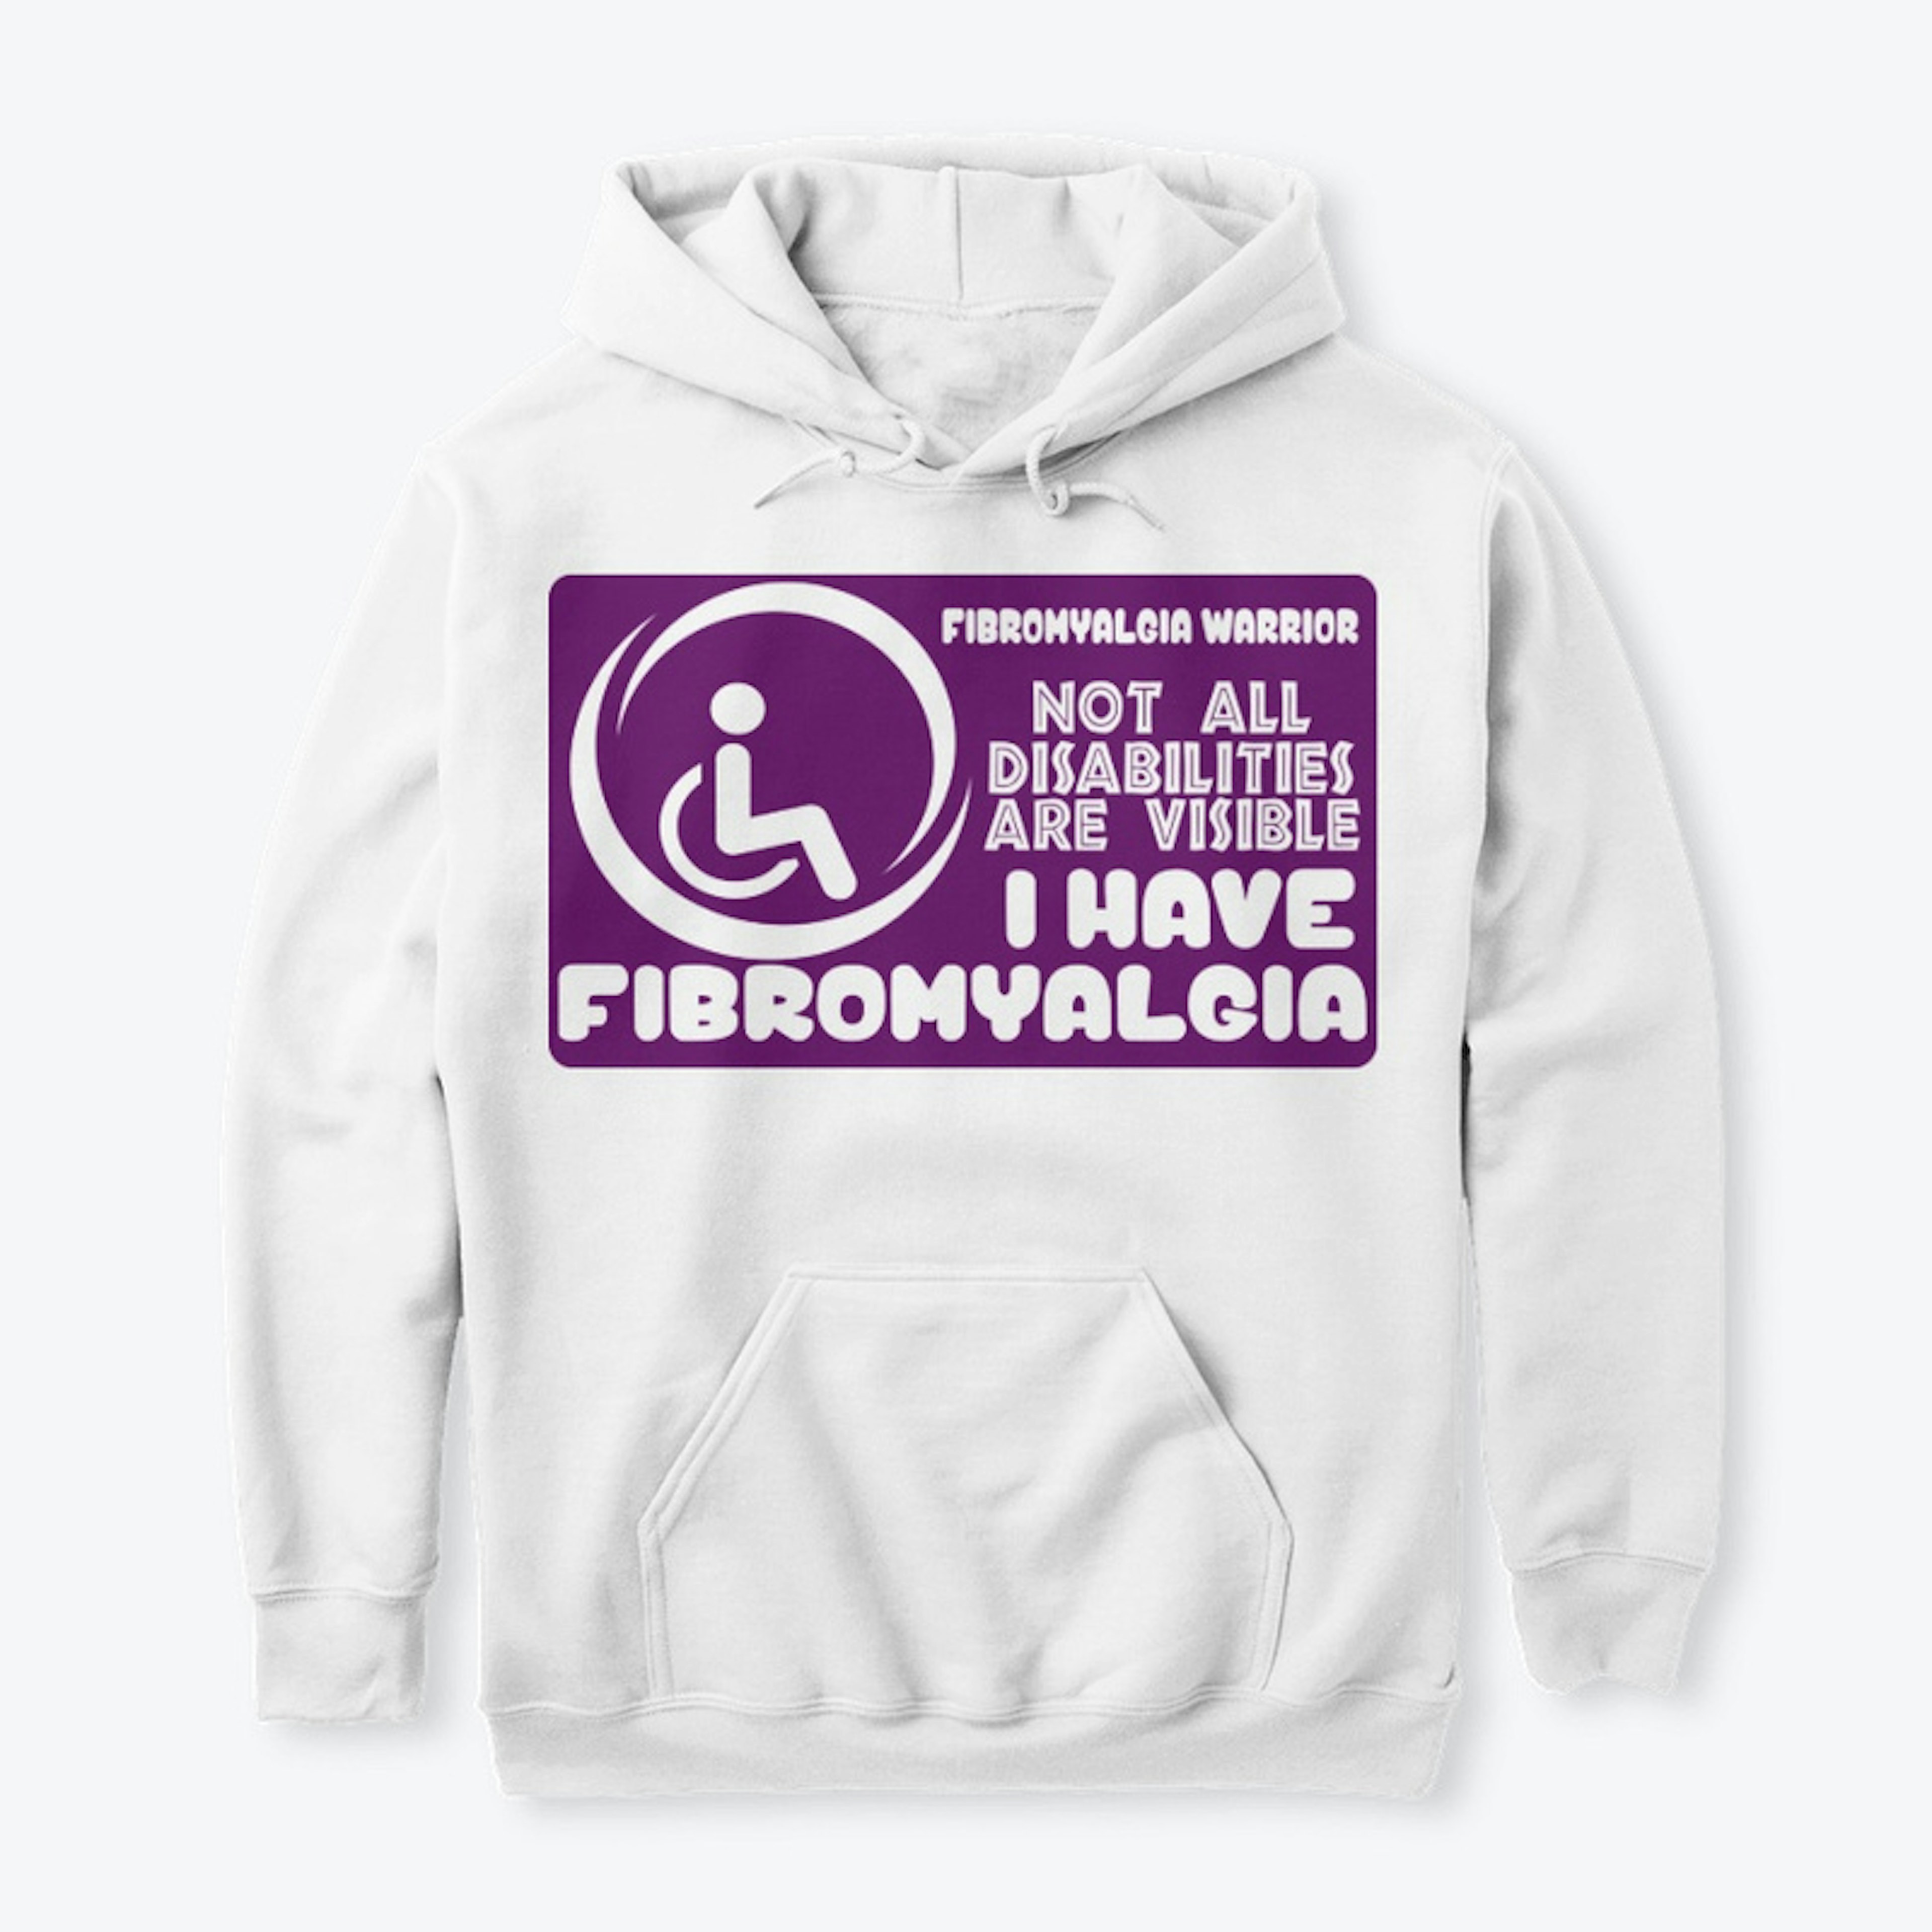 Disabilities of Fibrormyalgia